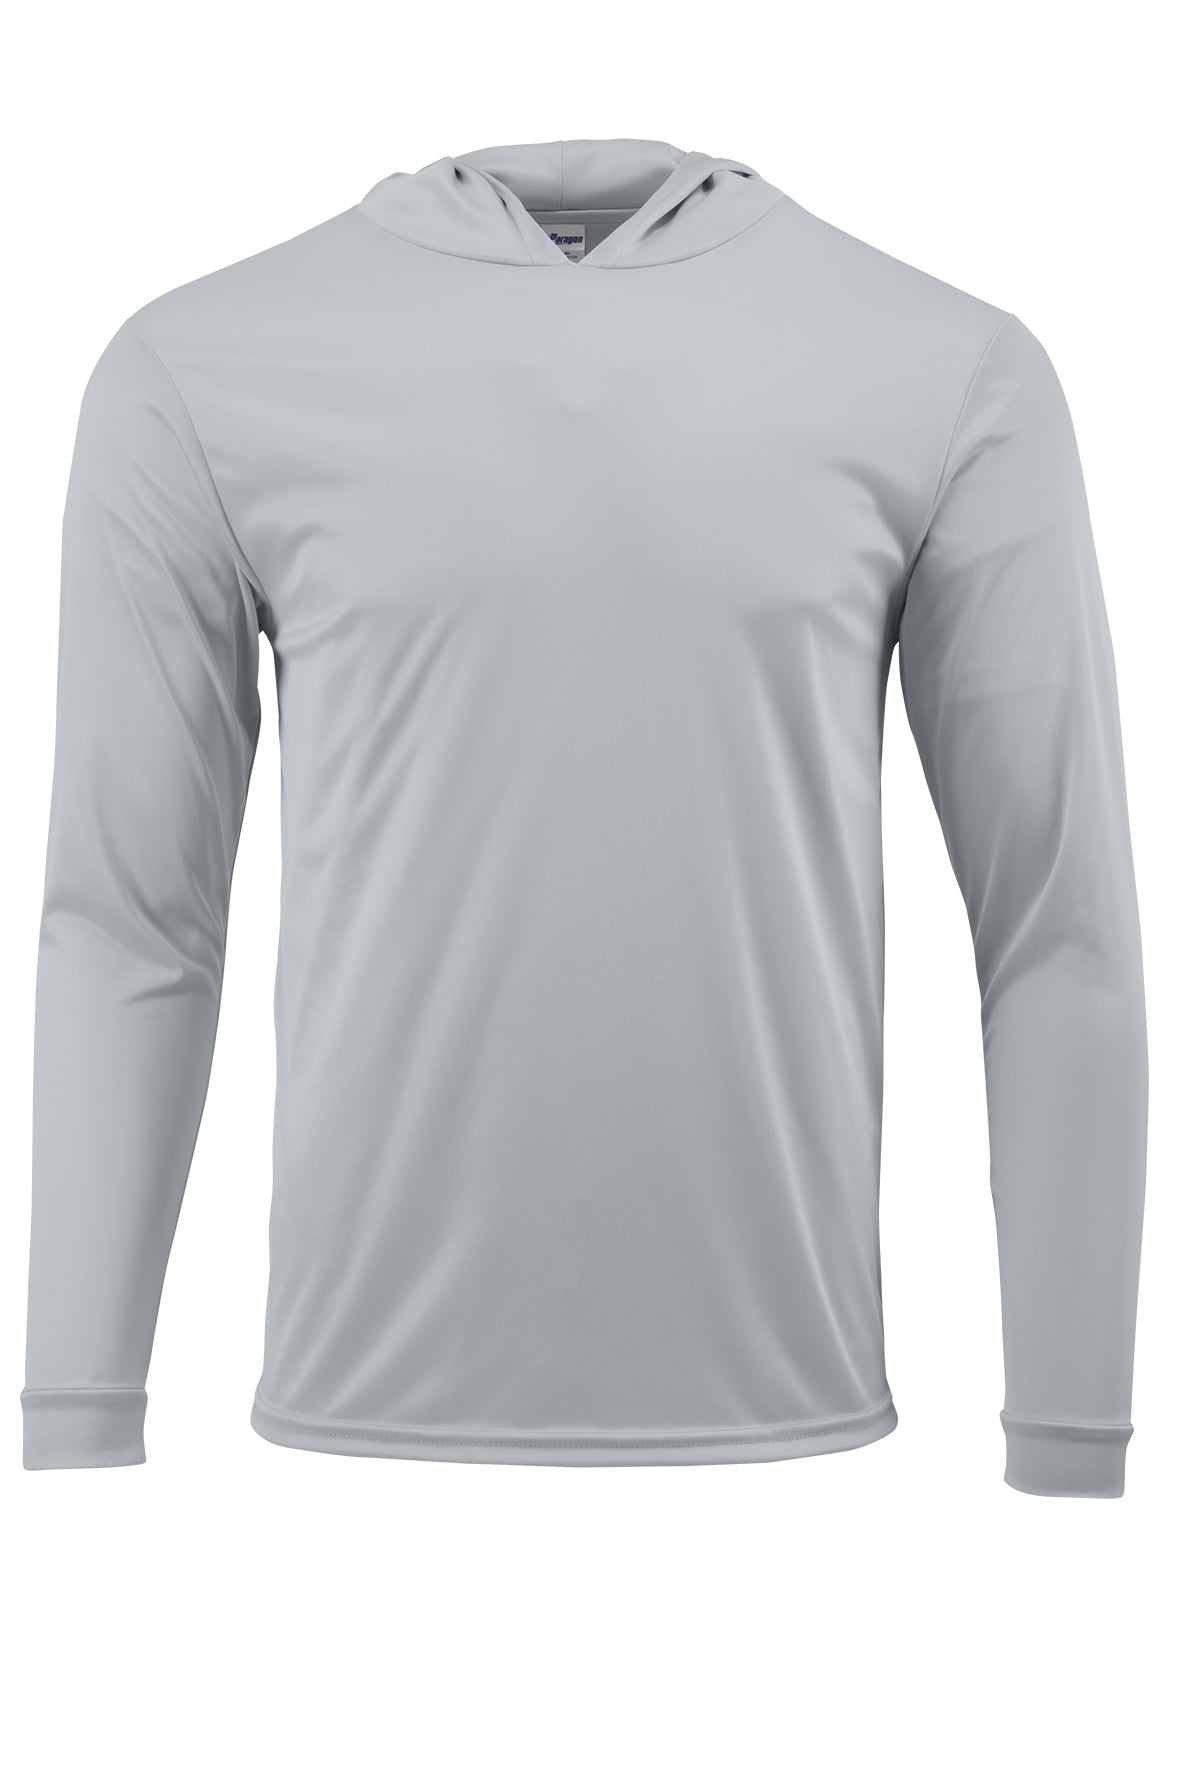 220PM Bahama Long Sleeve UPF50+ Hooded Shirt